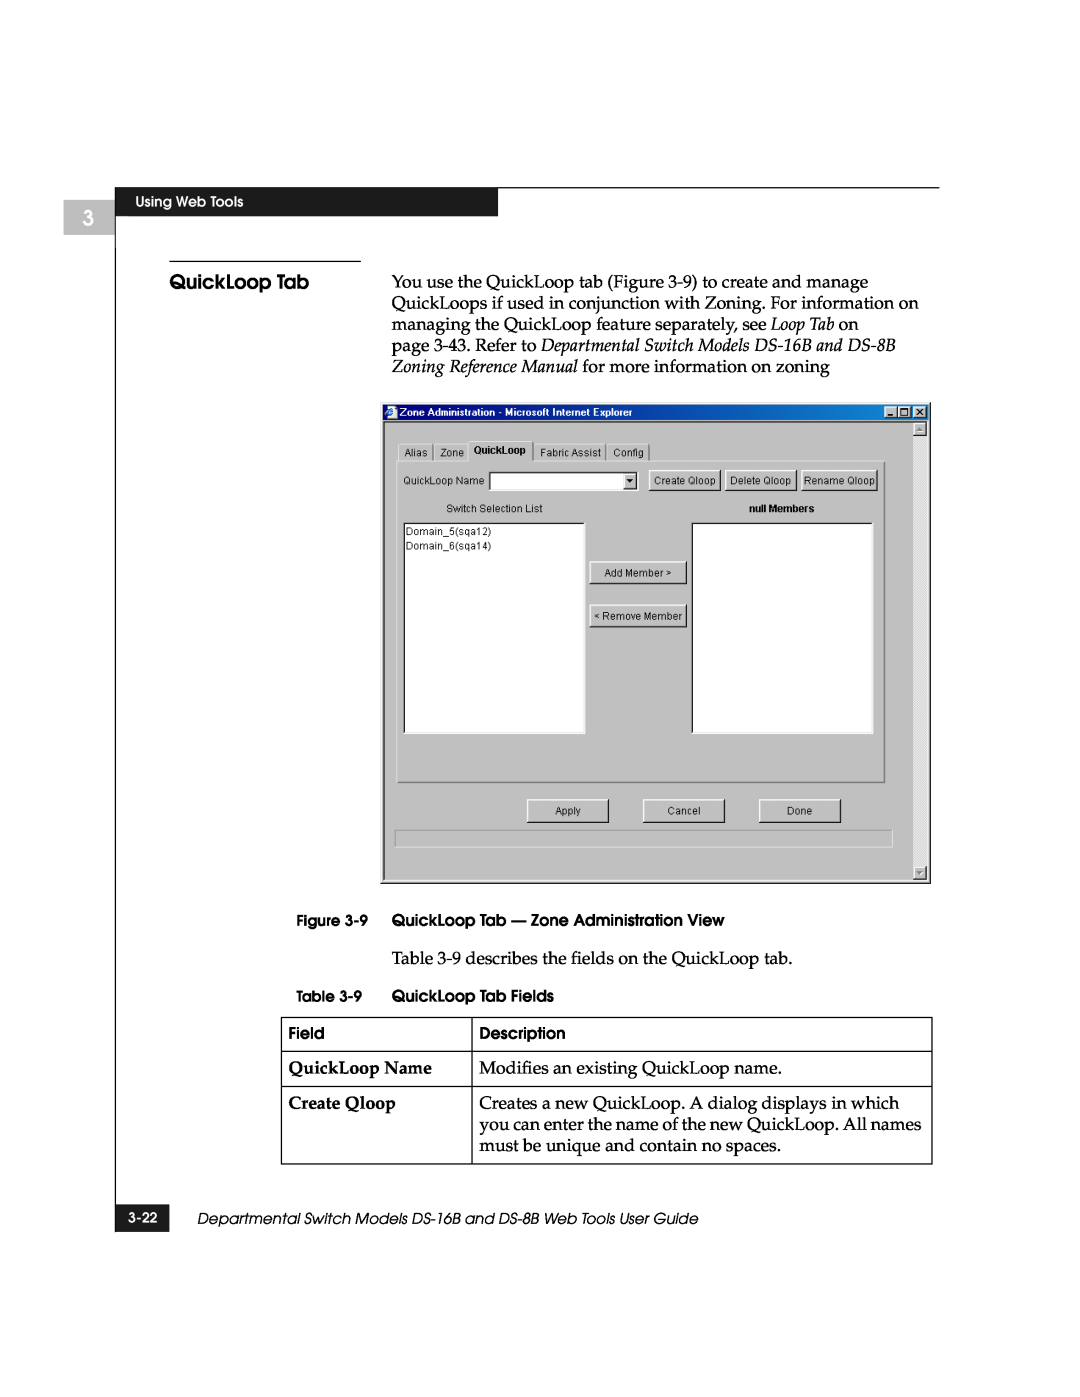 EMC DS-8B manual QuickLoop Tab, QuickLoop Name, Create Qloop 